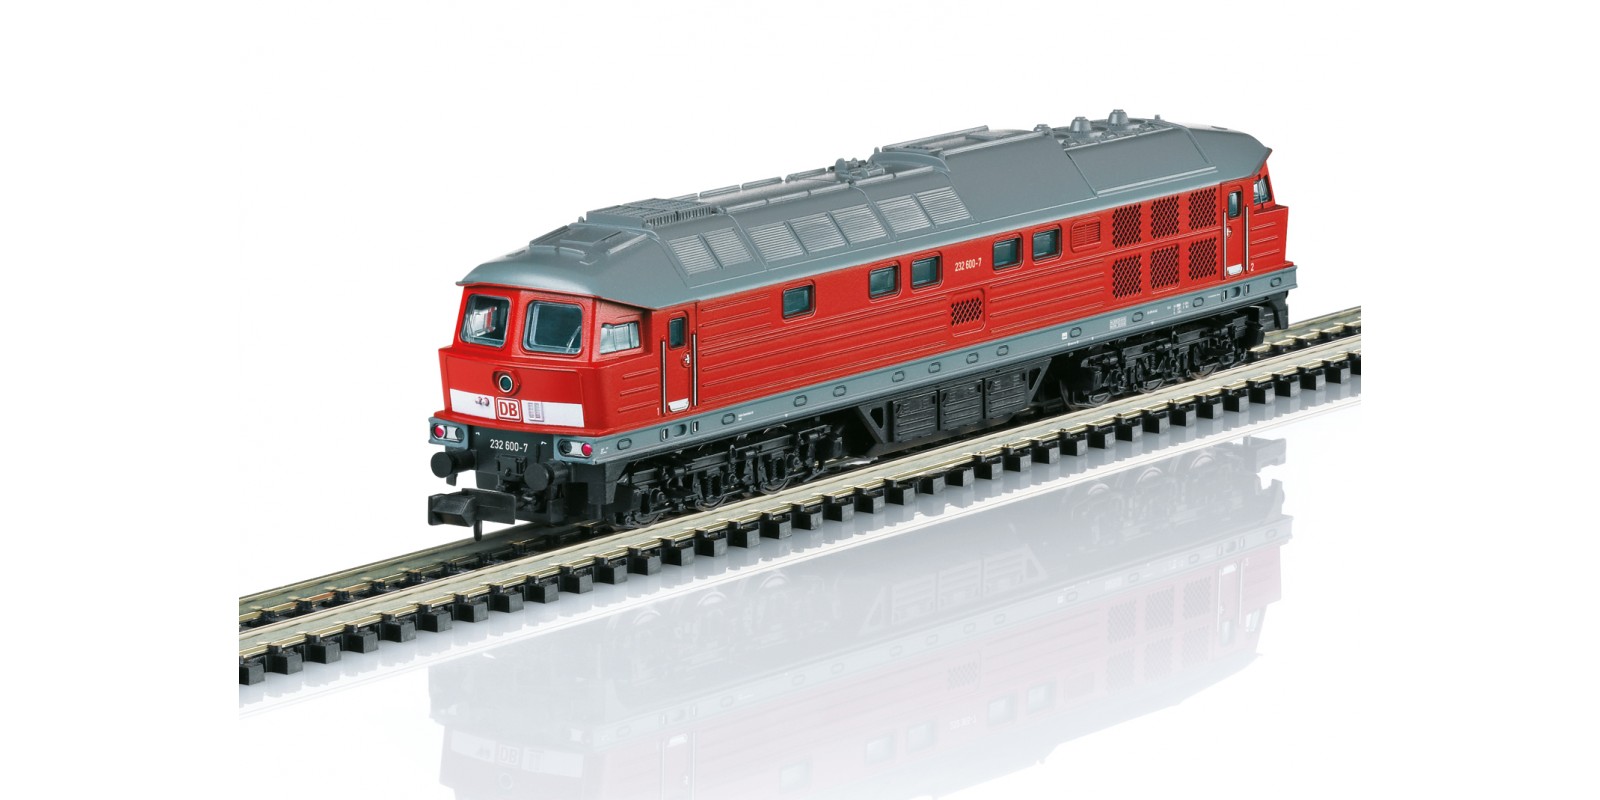 T16233 Class 232 Diesel Locomotive.